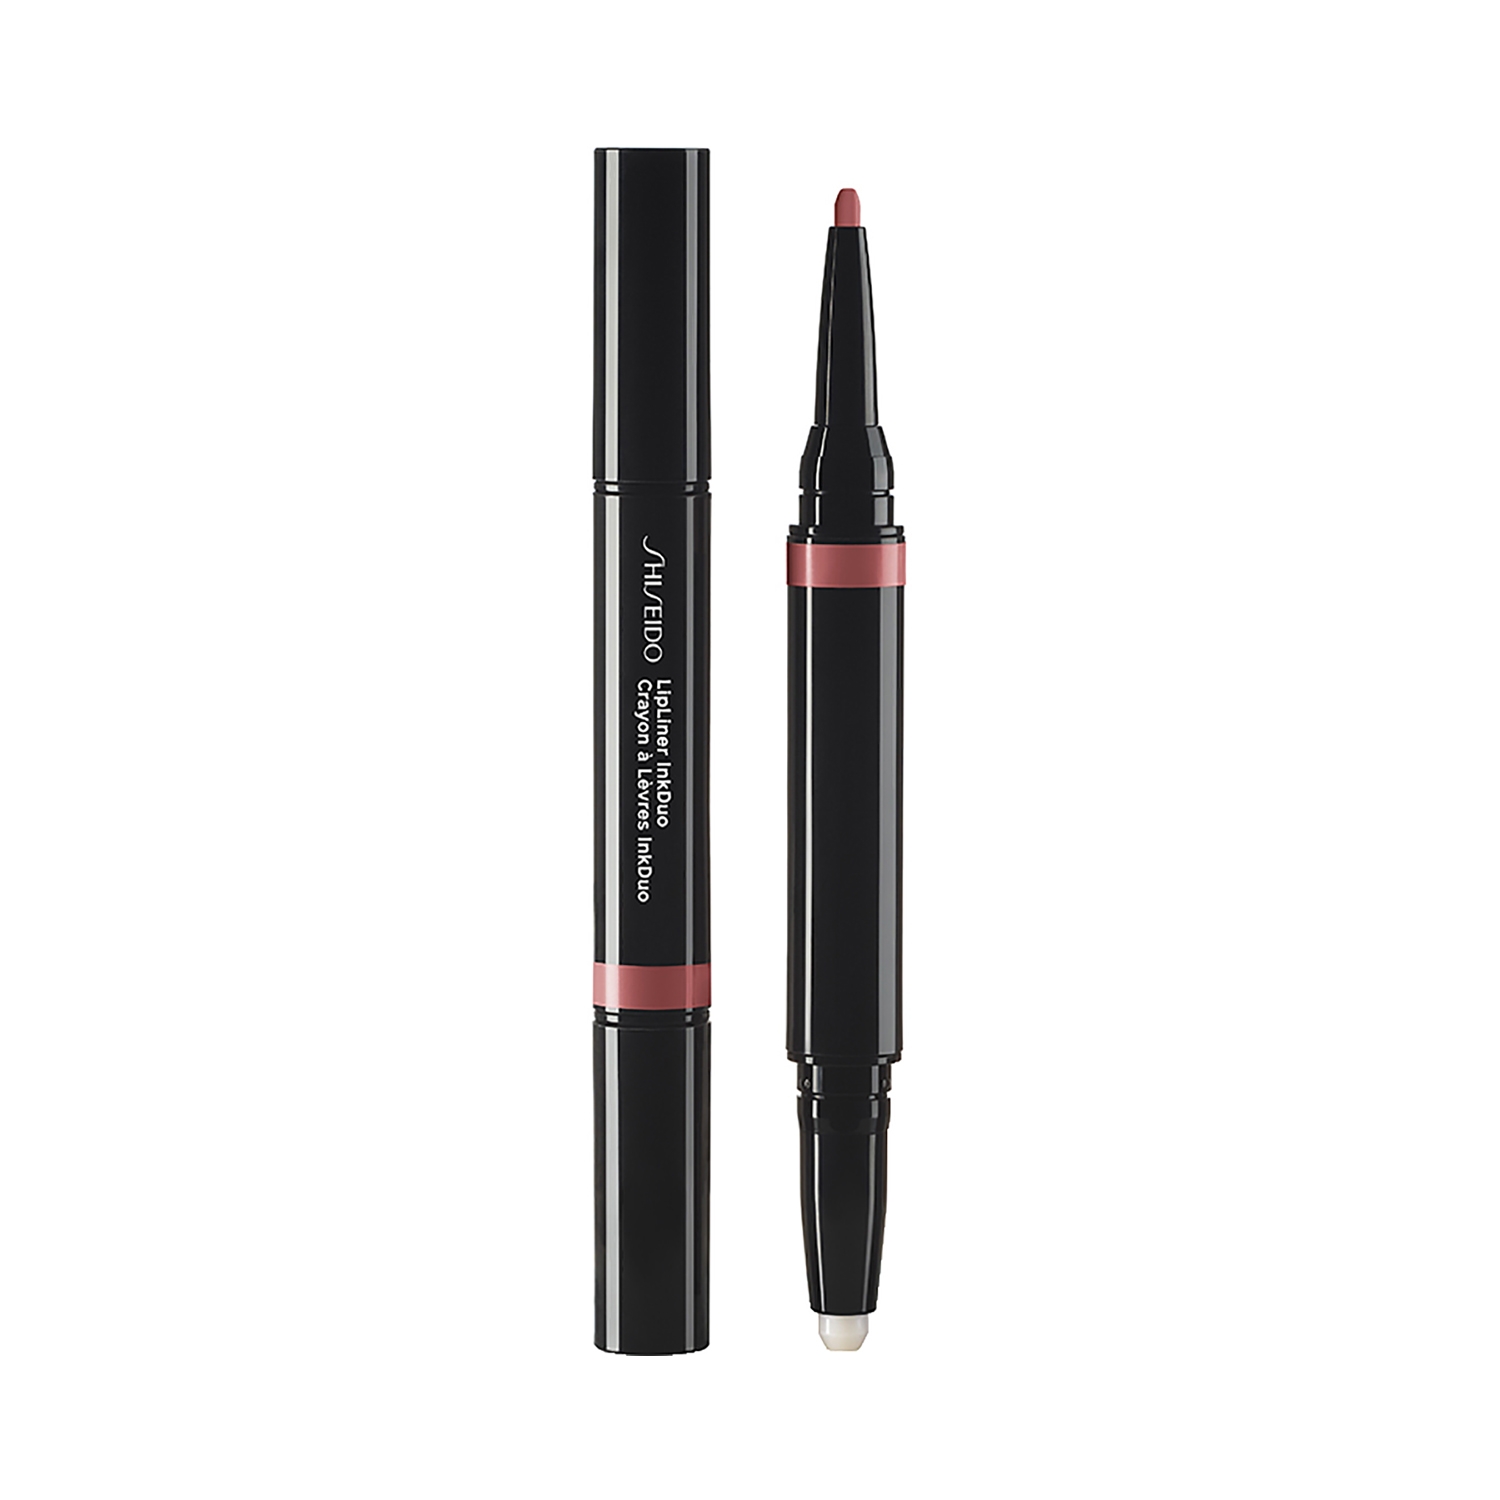 Shiseido | Shiseido Inkduo Prime and Line Duo Lipliner - 03 Mauve (1.1g)